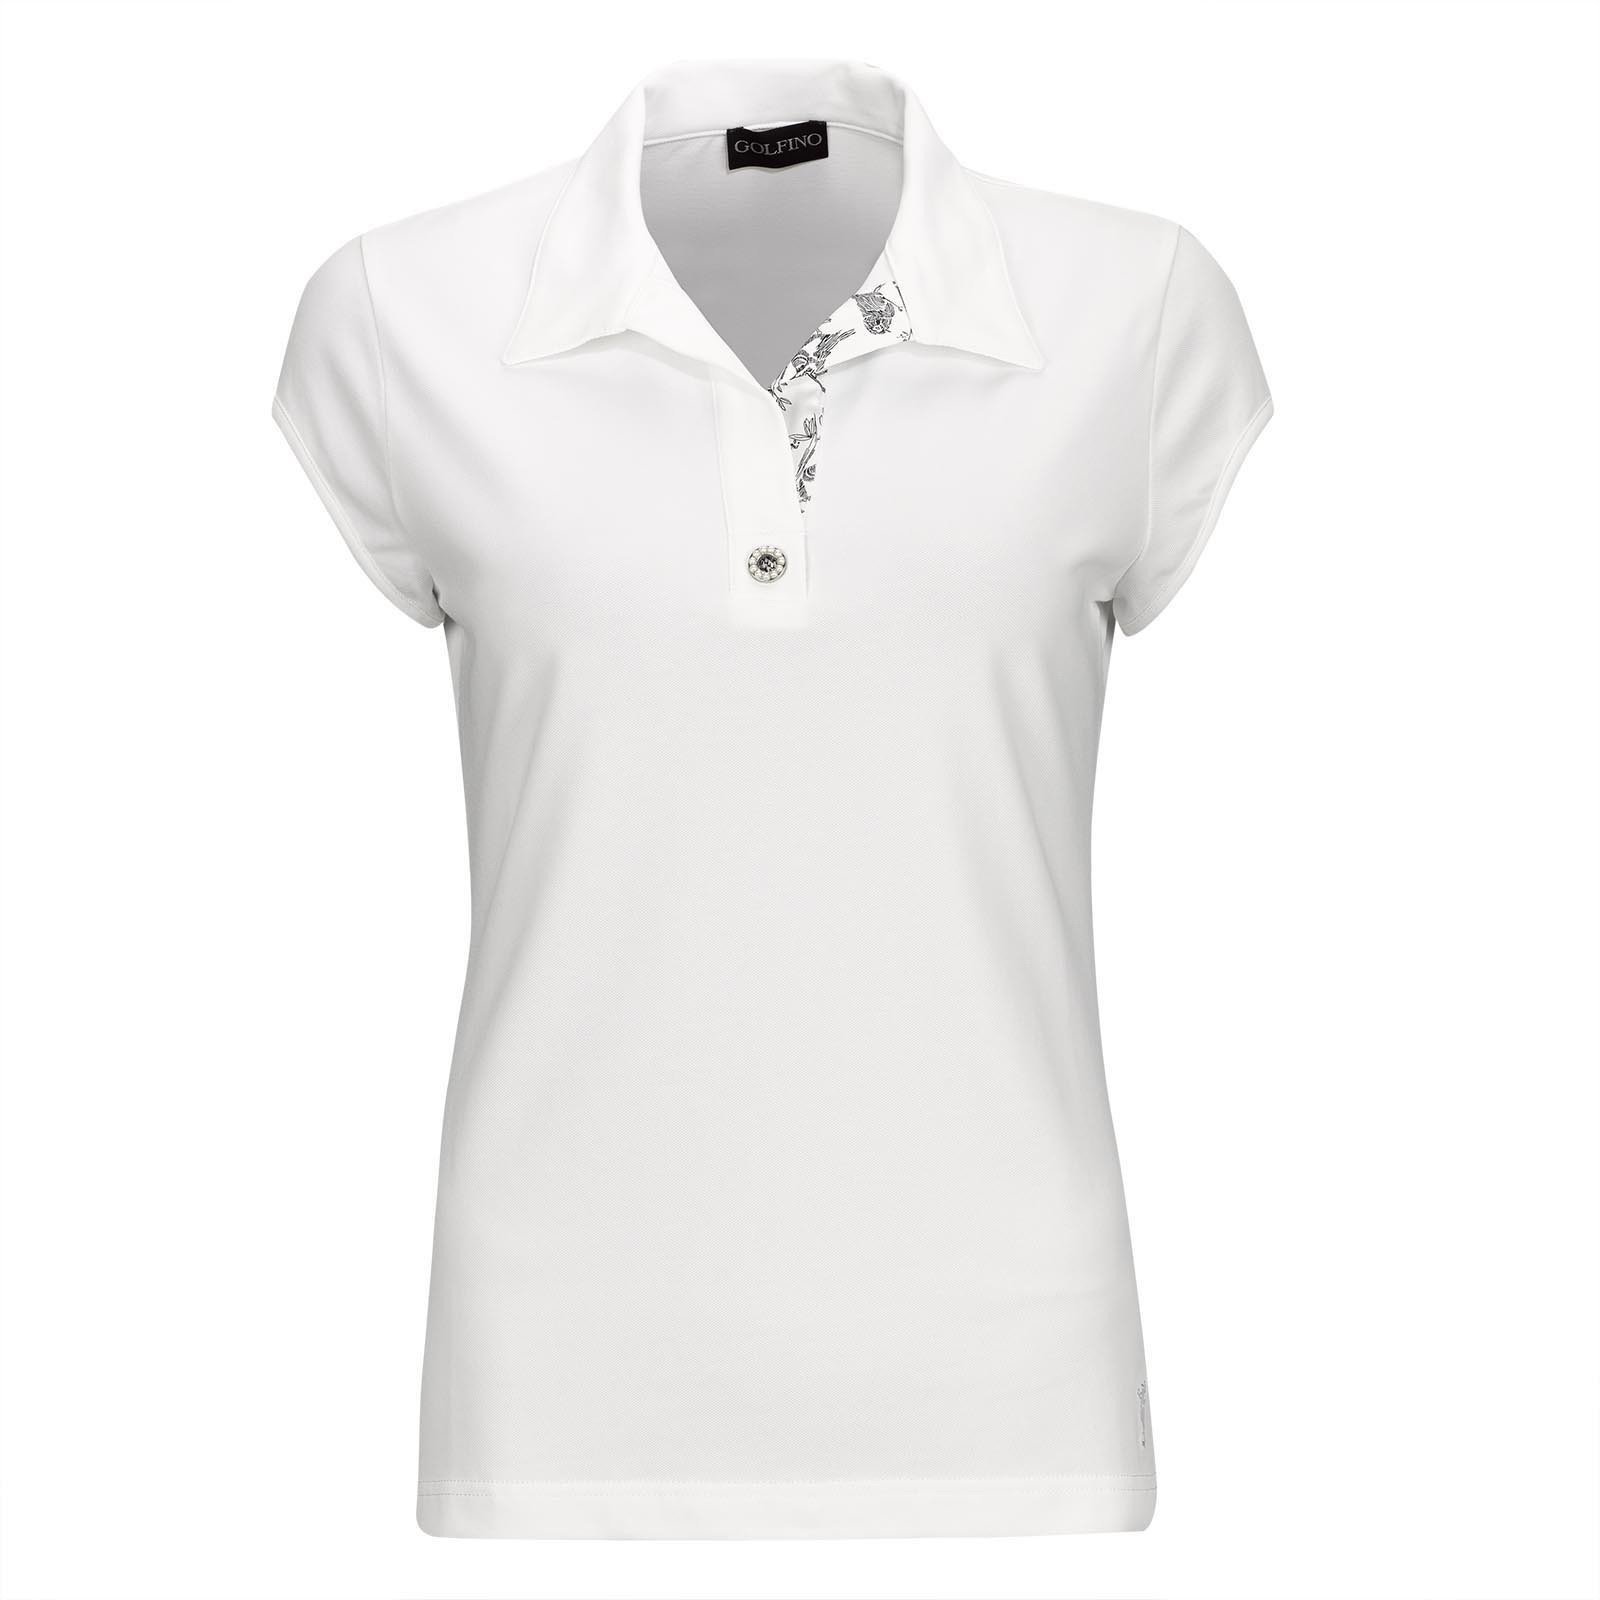 Poolopaita Golfino Pearls Cap Sleeve Womens Polo Shirt White 34